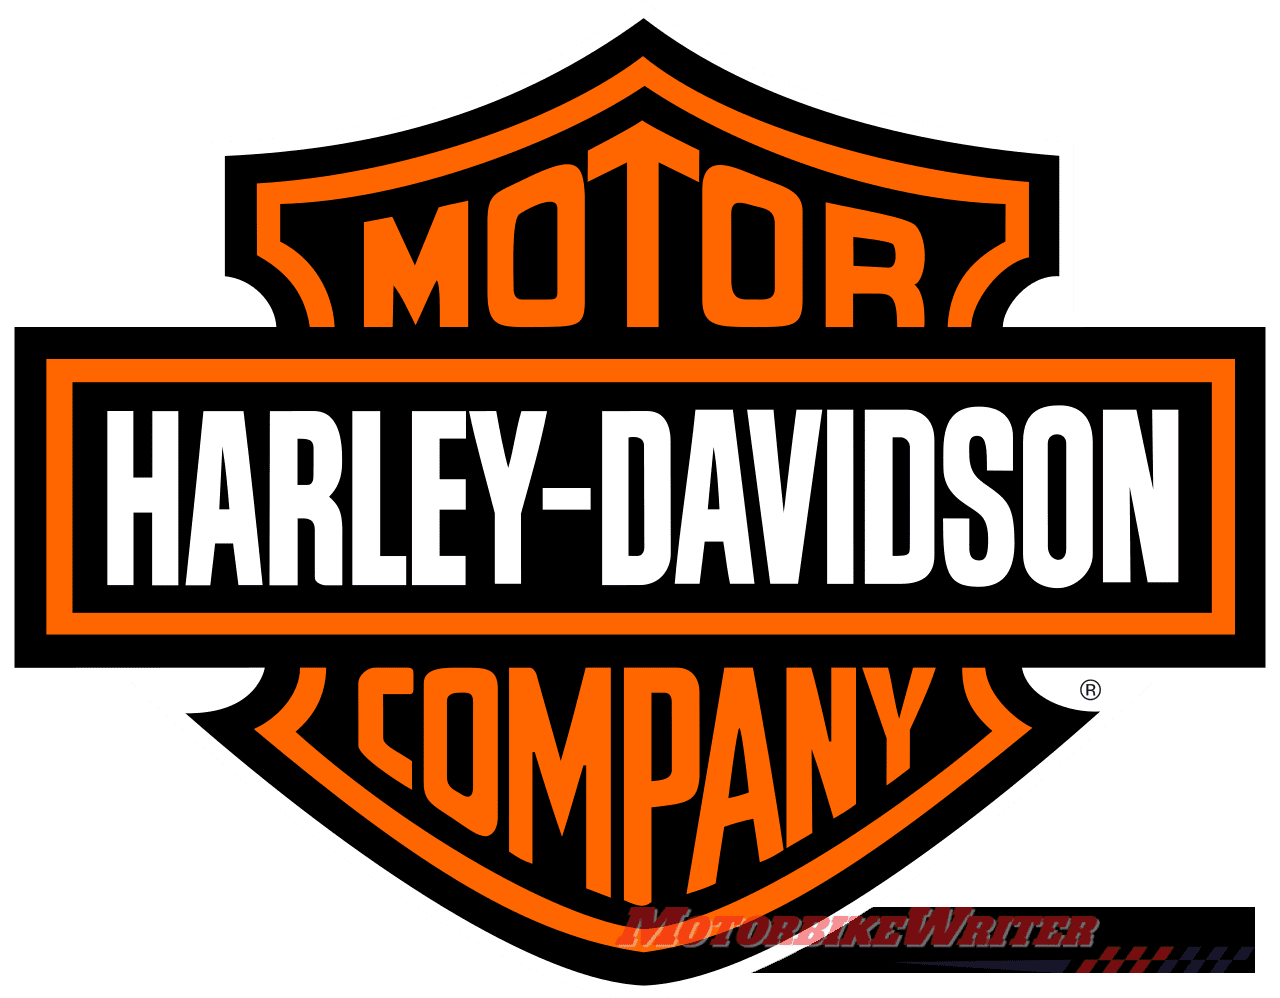 Harley-Davidson brand bites